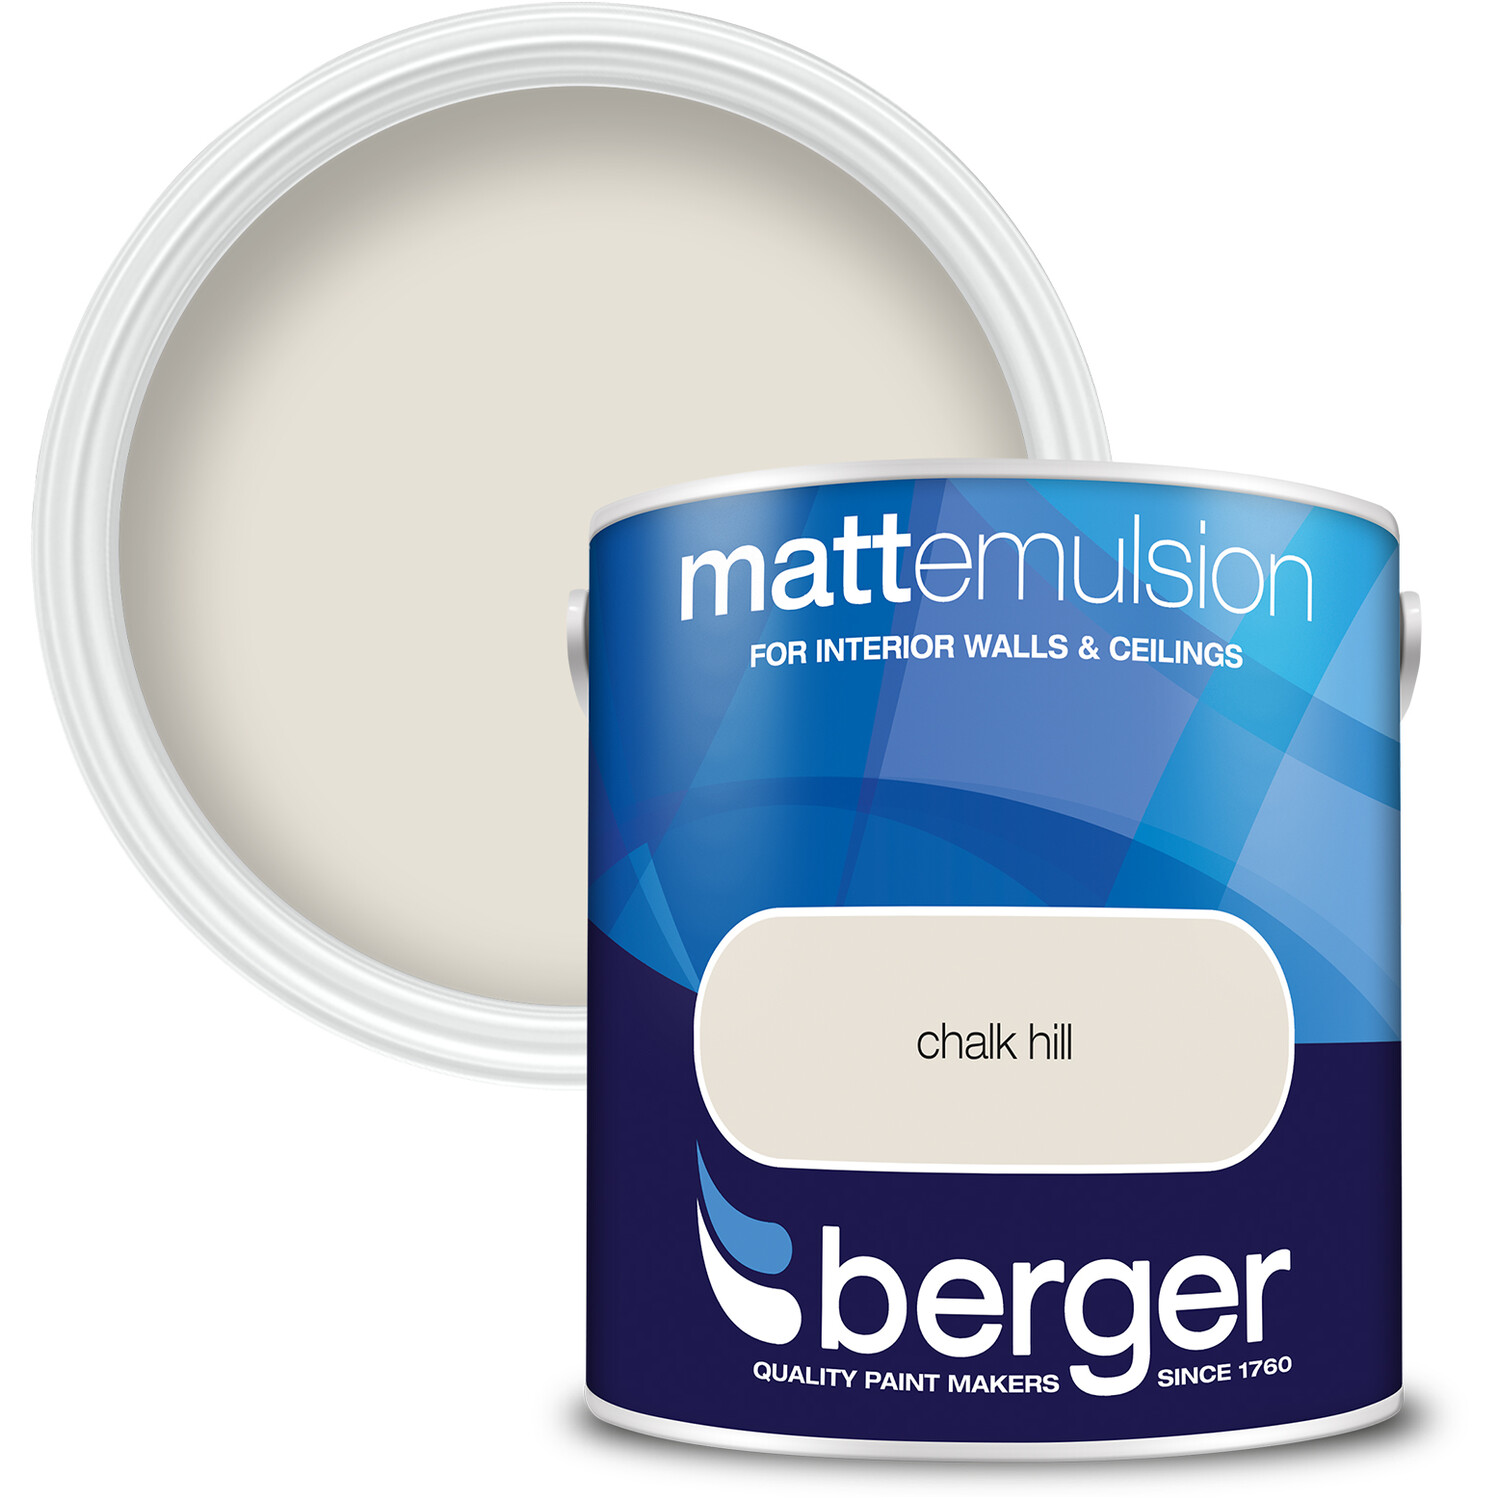 Berger Walls & Ceilings Chalk Hill Matt Emulsion Paint 2.5L Image 1